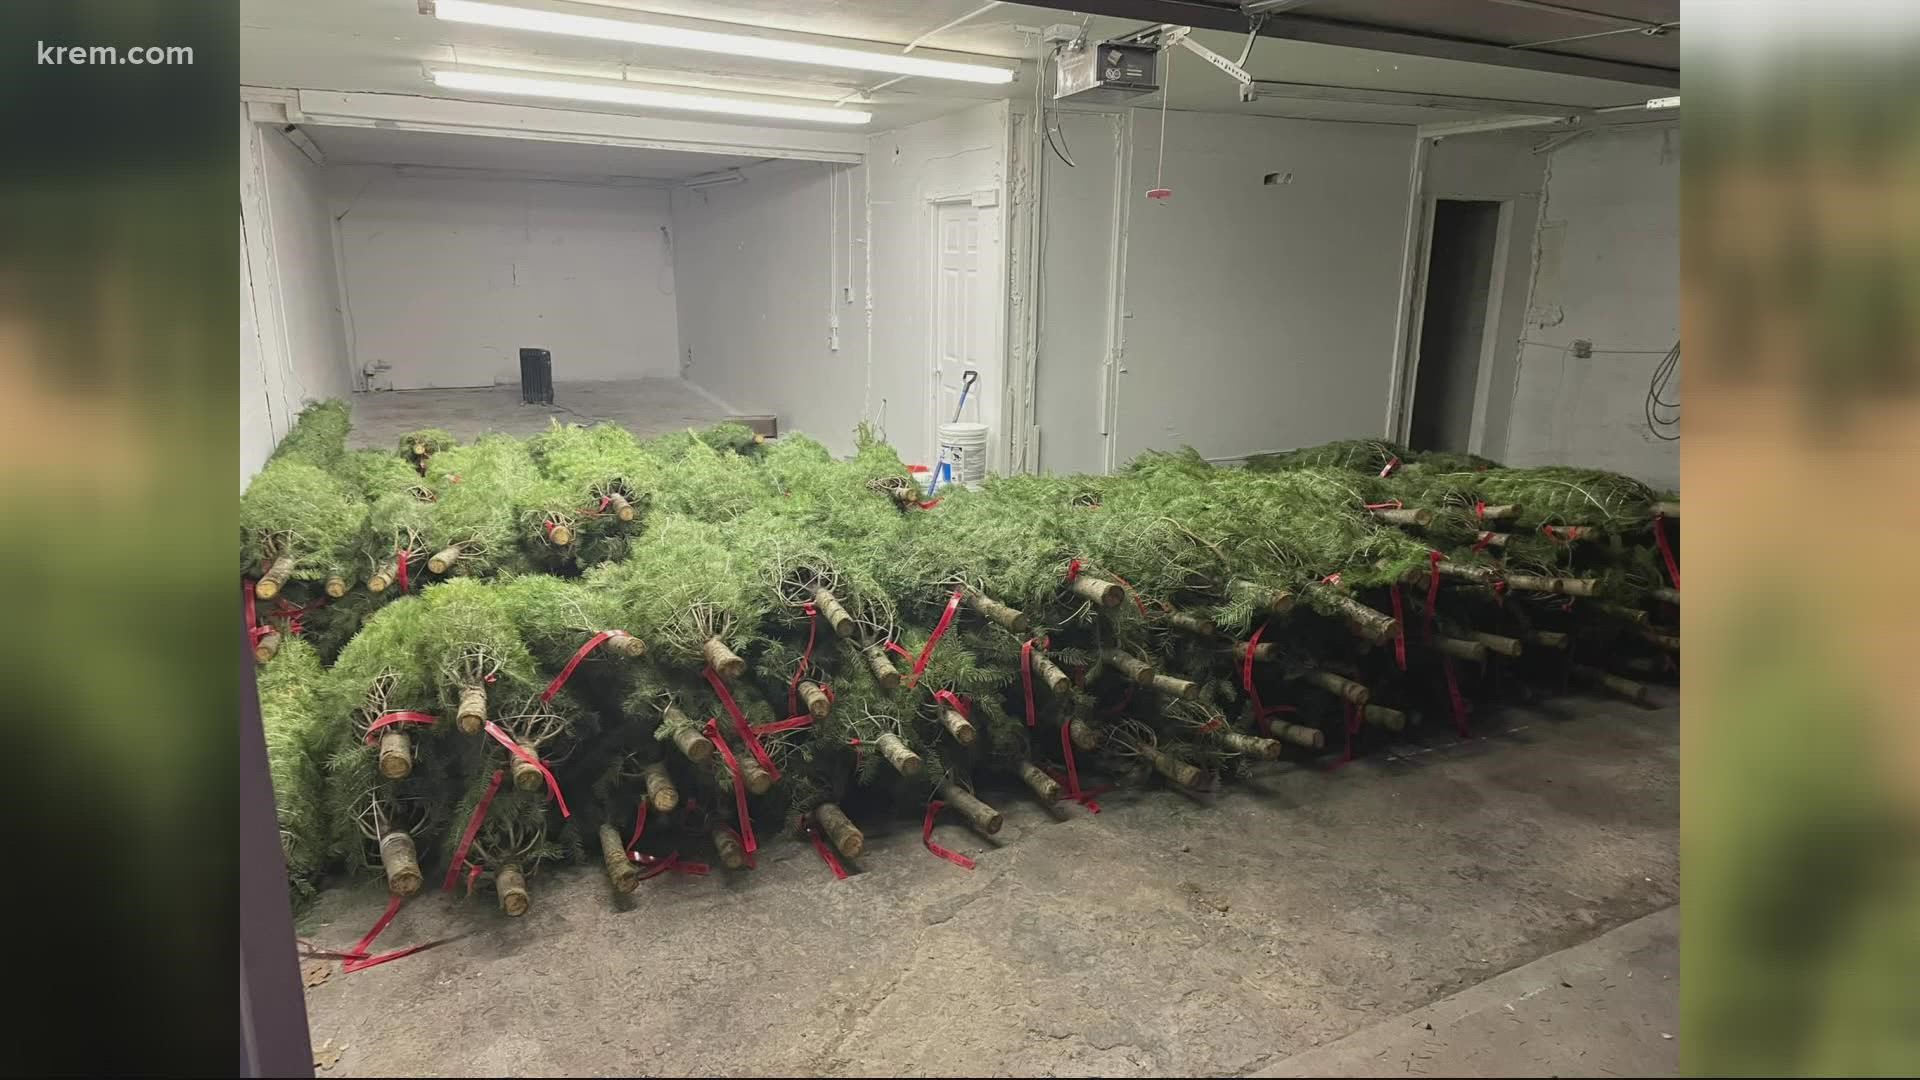 A tree farm in Oregon provided Spokane Quaranteam with 300 Christmas trees to donate to families in Spokane.